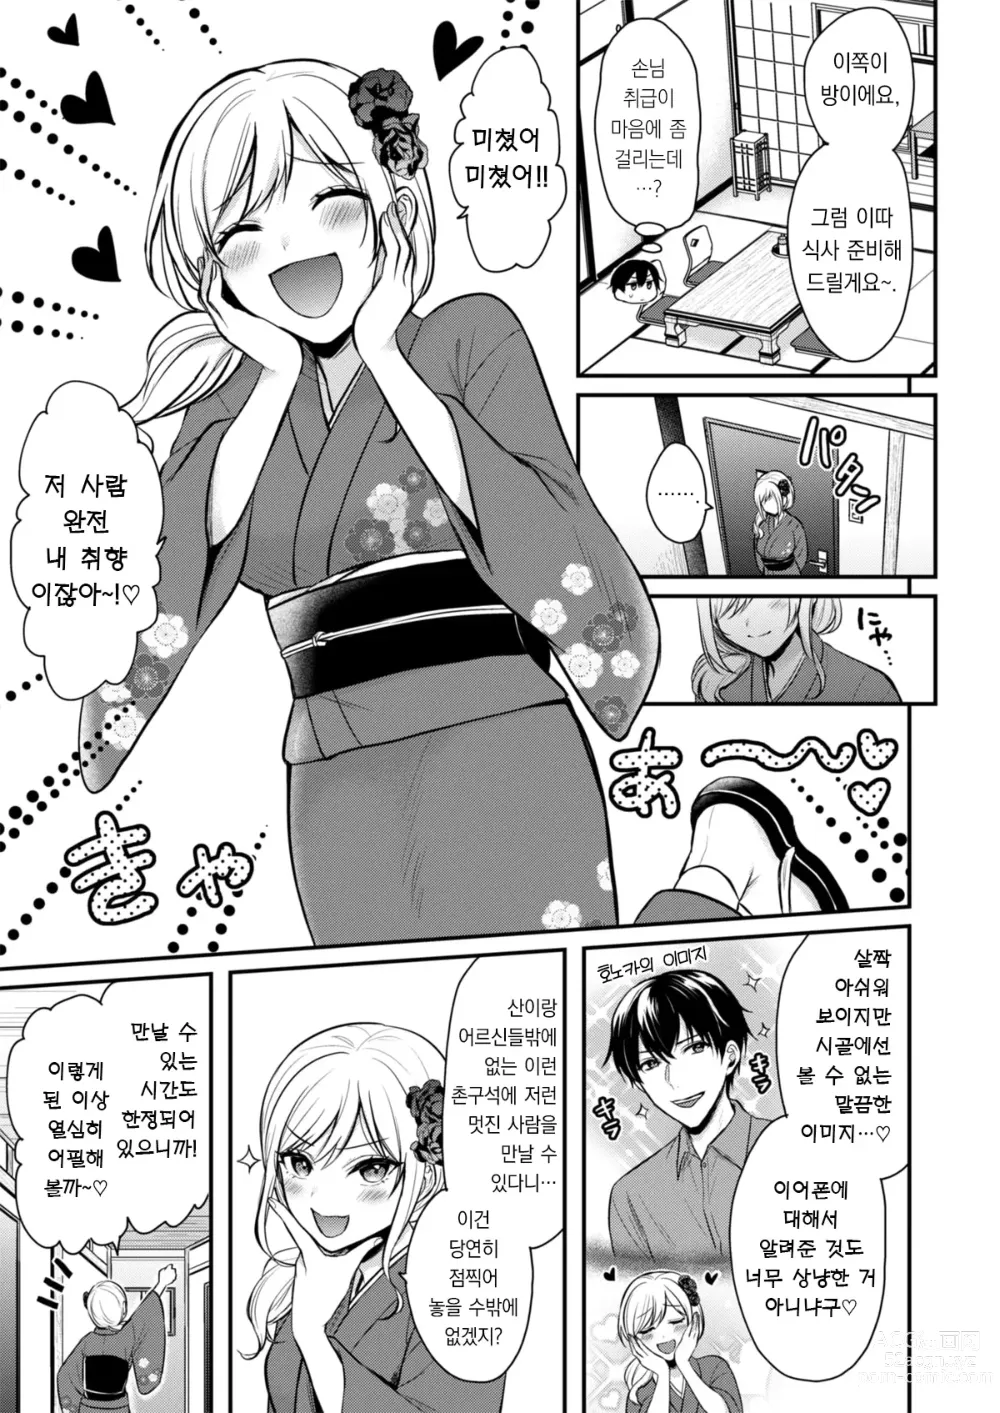 Page 7 of manga 내 여름방학은 젊은 갸루 안주인과 알바 생활?! 1